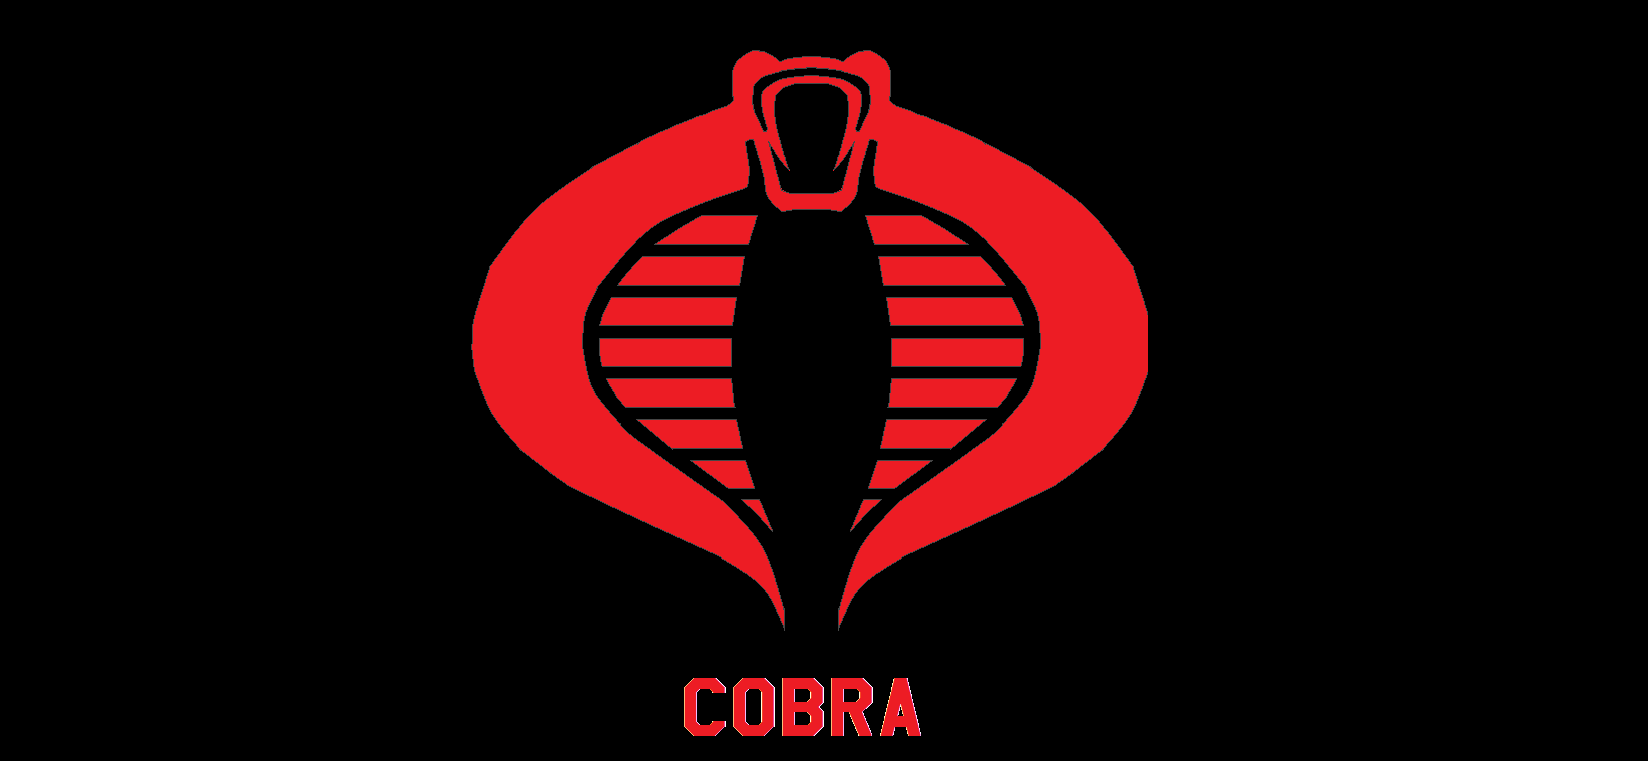 Cobra GI Joe Wallpaper